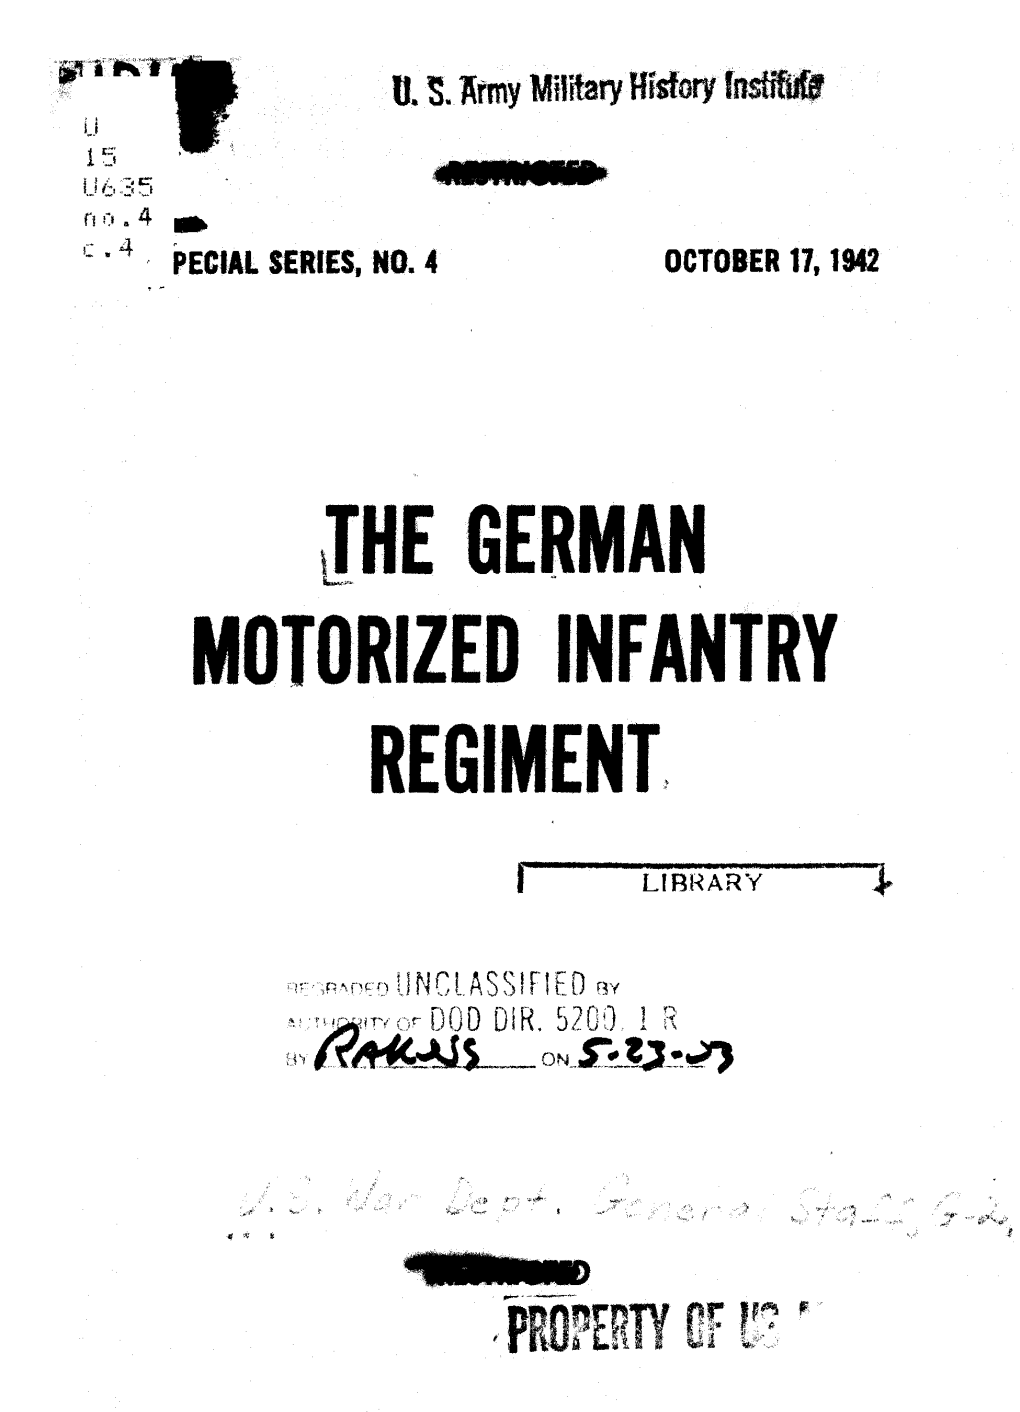 The German Motorized Infantry Regiment